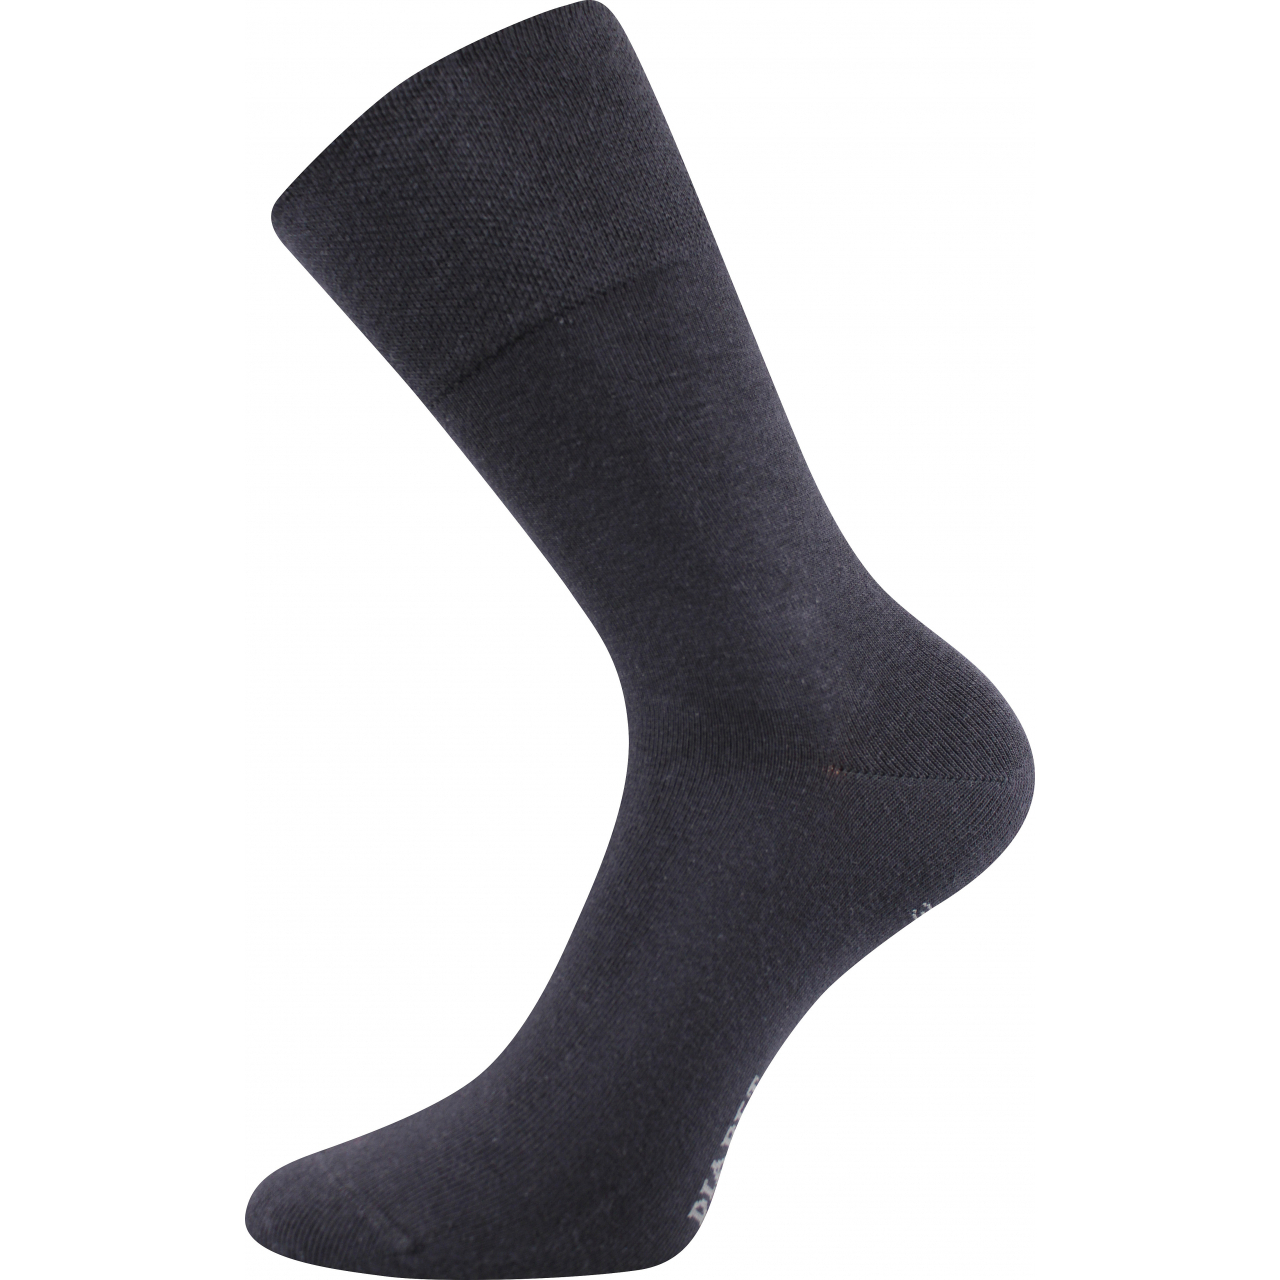 Ponožky klasické unisex Lonka Diagram - tmavě šedé, 43-46